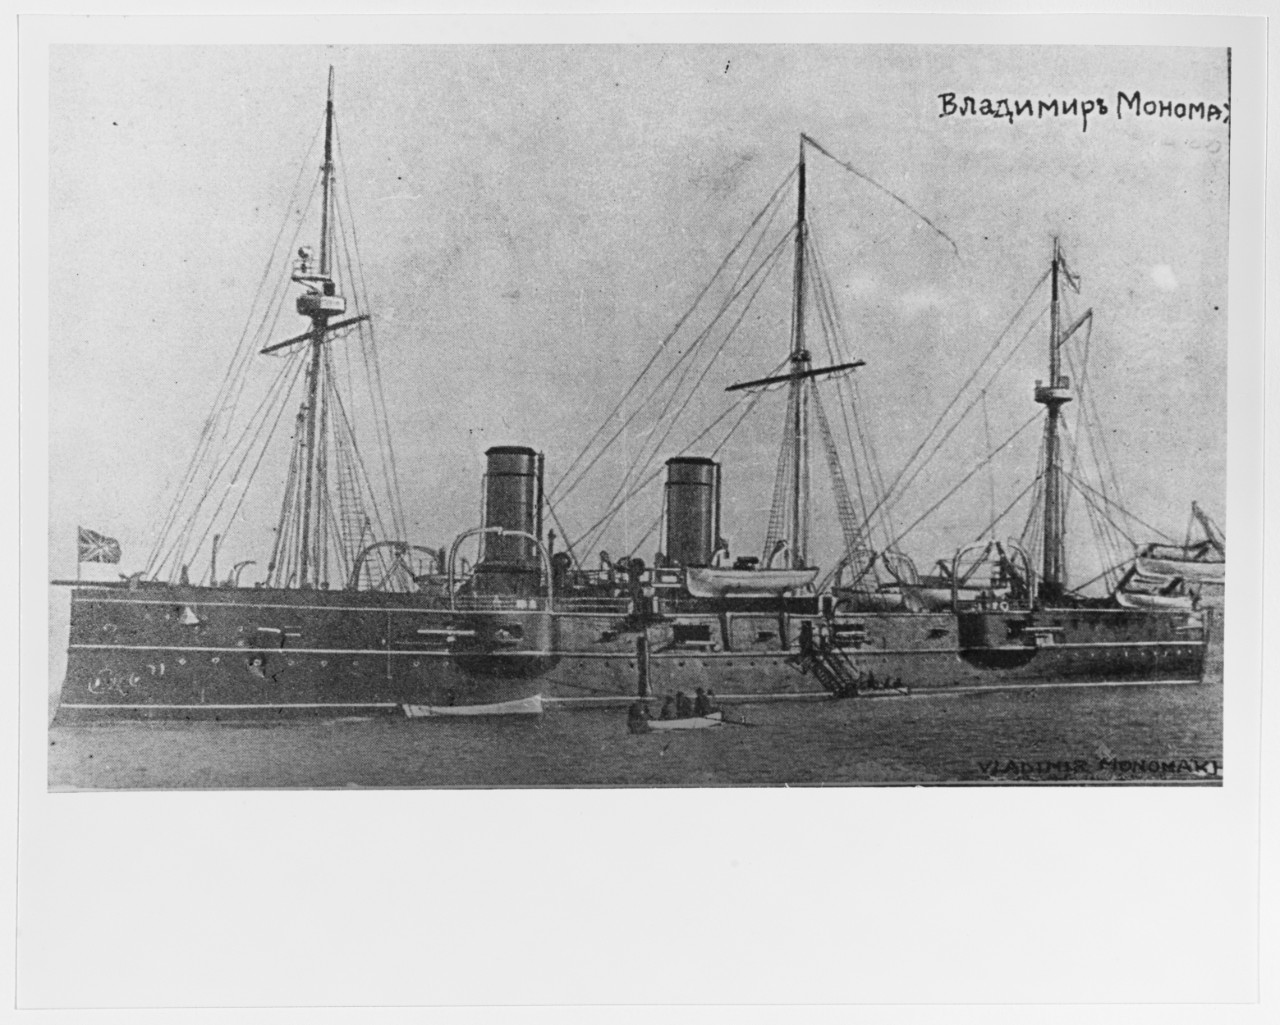 VLADIMIR MONOMAKH (Russian armored cruiser, 1882-1905)